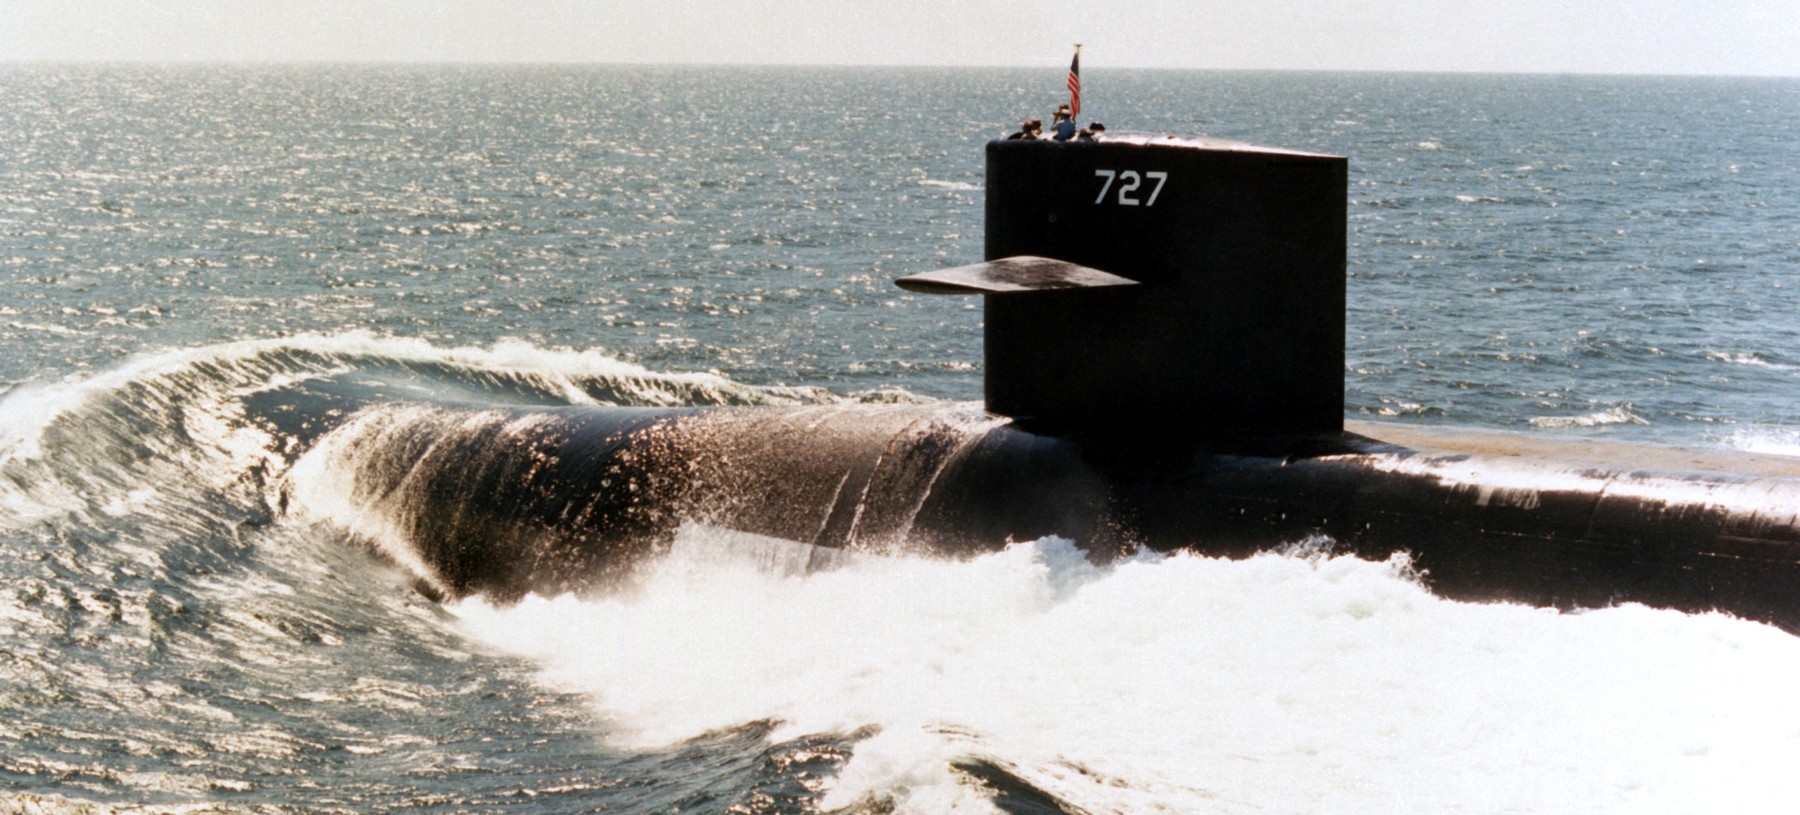 ssbn-727 uss michigan ohio class ballistic missile submarine 1983 41